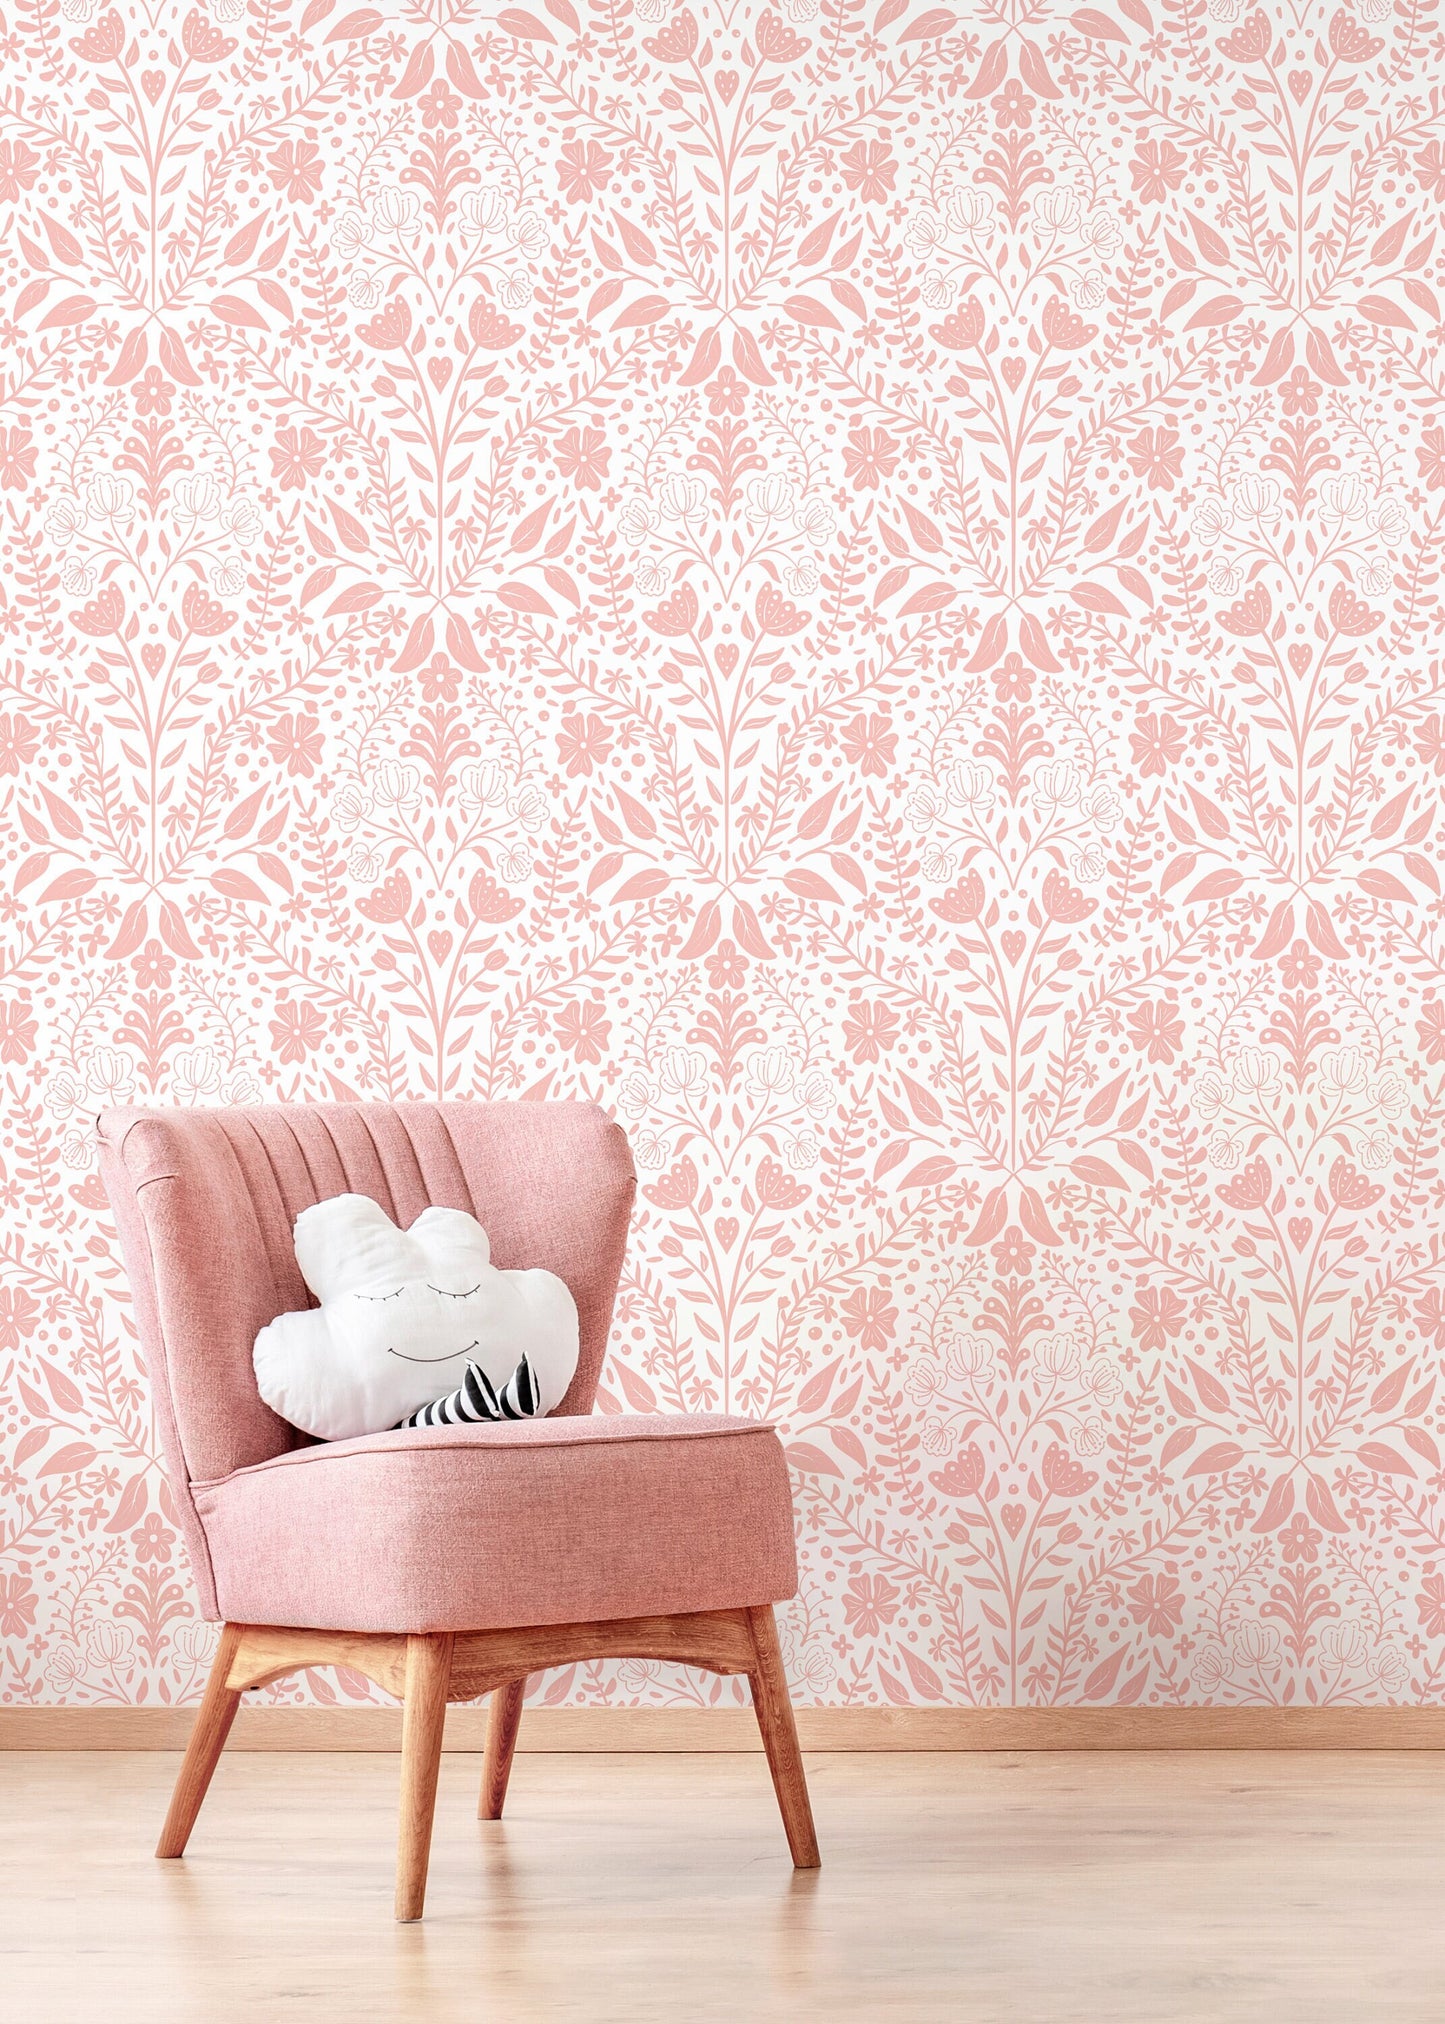 Pink Boho Floral Wallpaper / Peel and Stick Wallpaper Removable Wallpaper Home Decor Wall Art Wall Decor Room Decor - D040